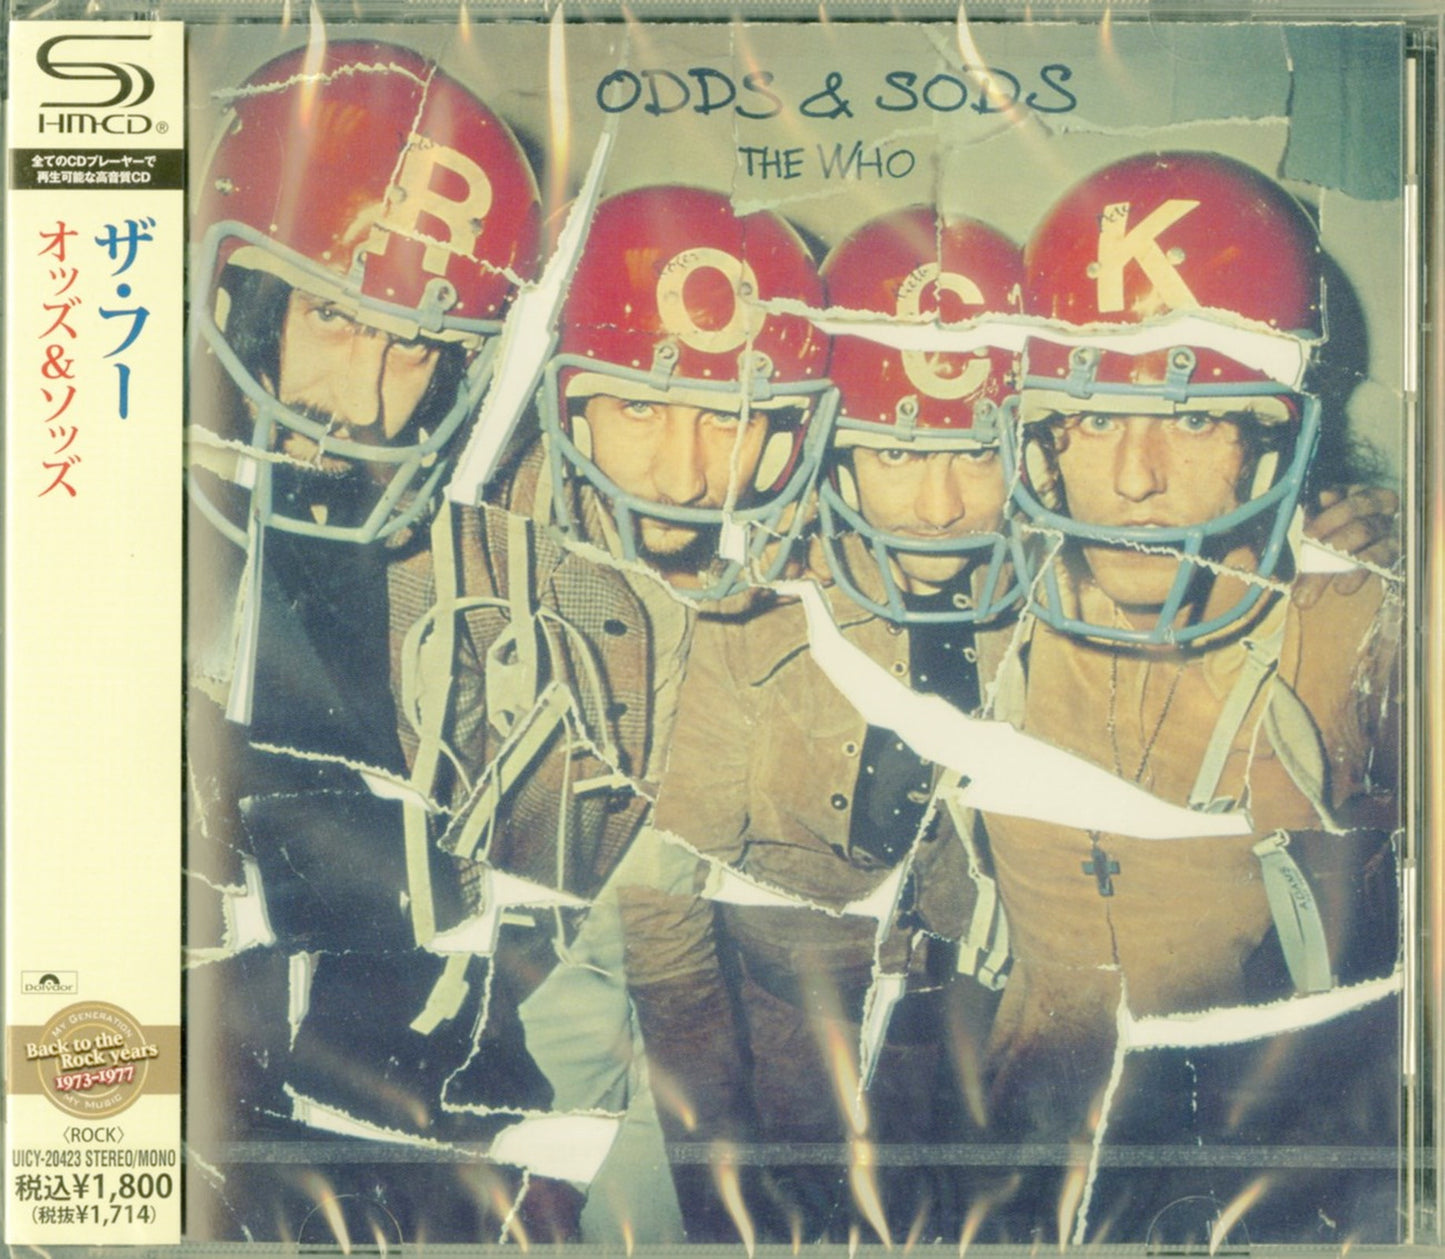 The Who - Odds & Sods - Japan  SHM-CD